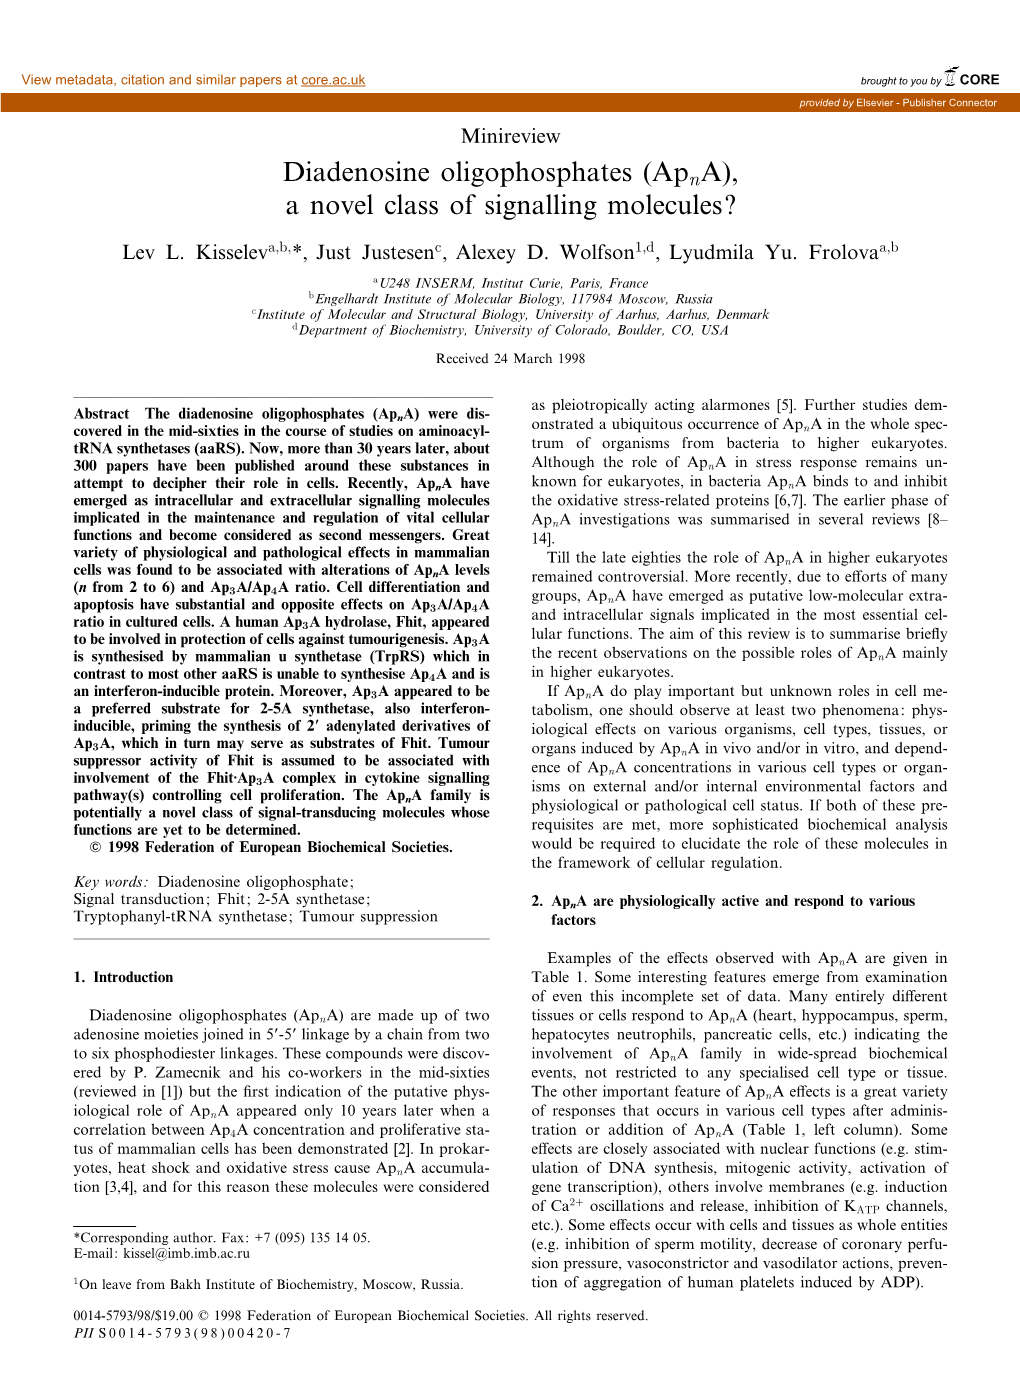 Diadenosine Oligophosphates (Apna), a Novel Class of Signalling Molecules?